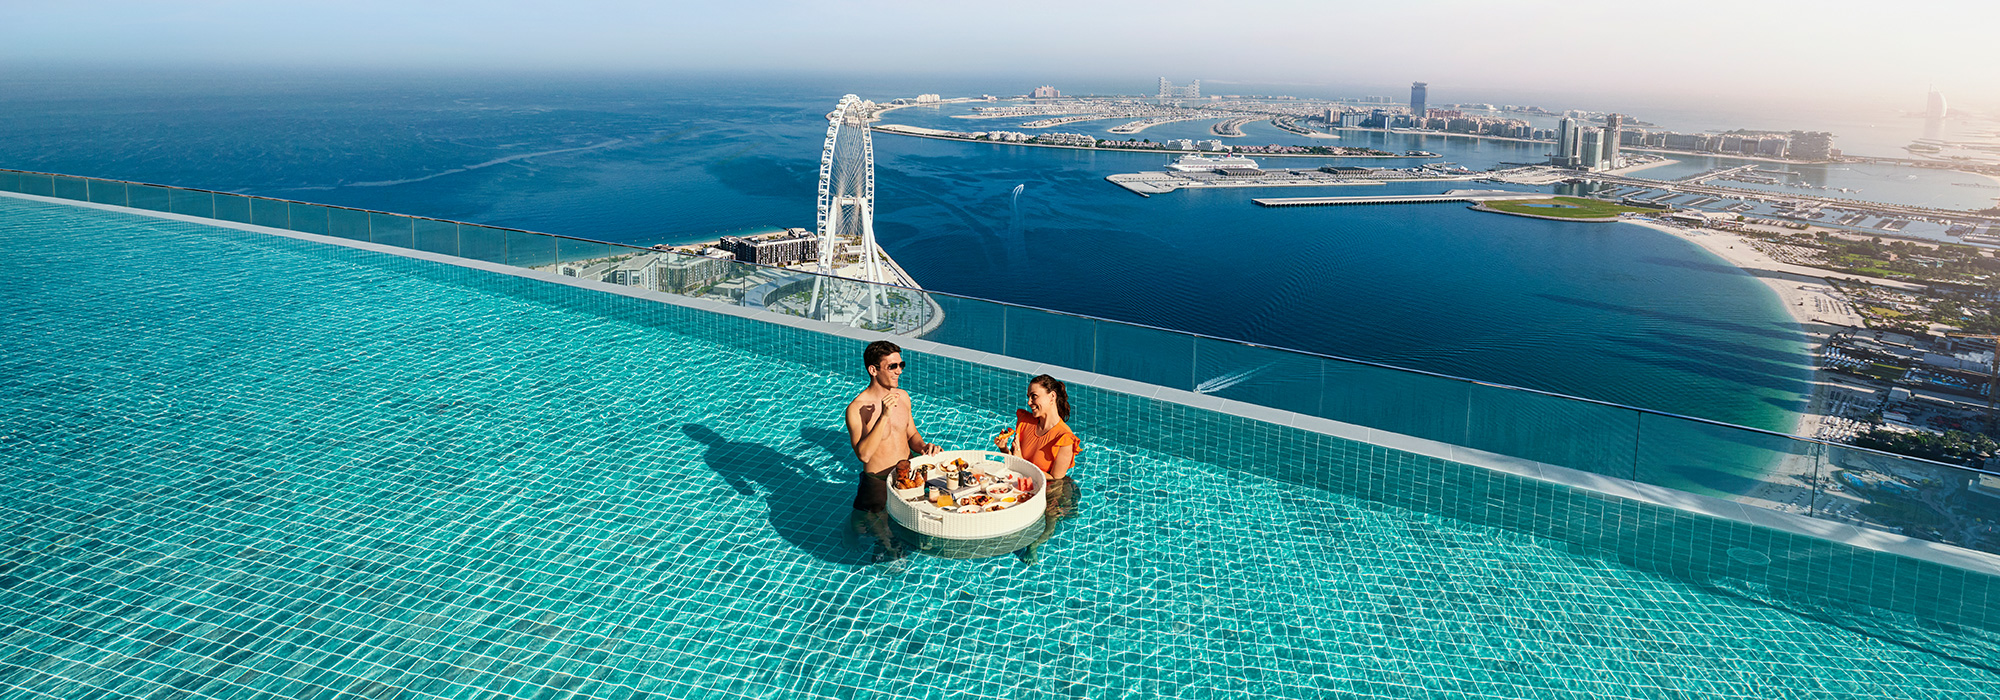 Infinity Pool Hotels Dubai